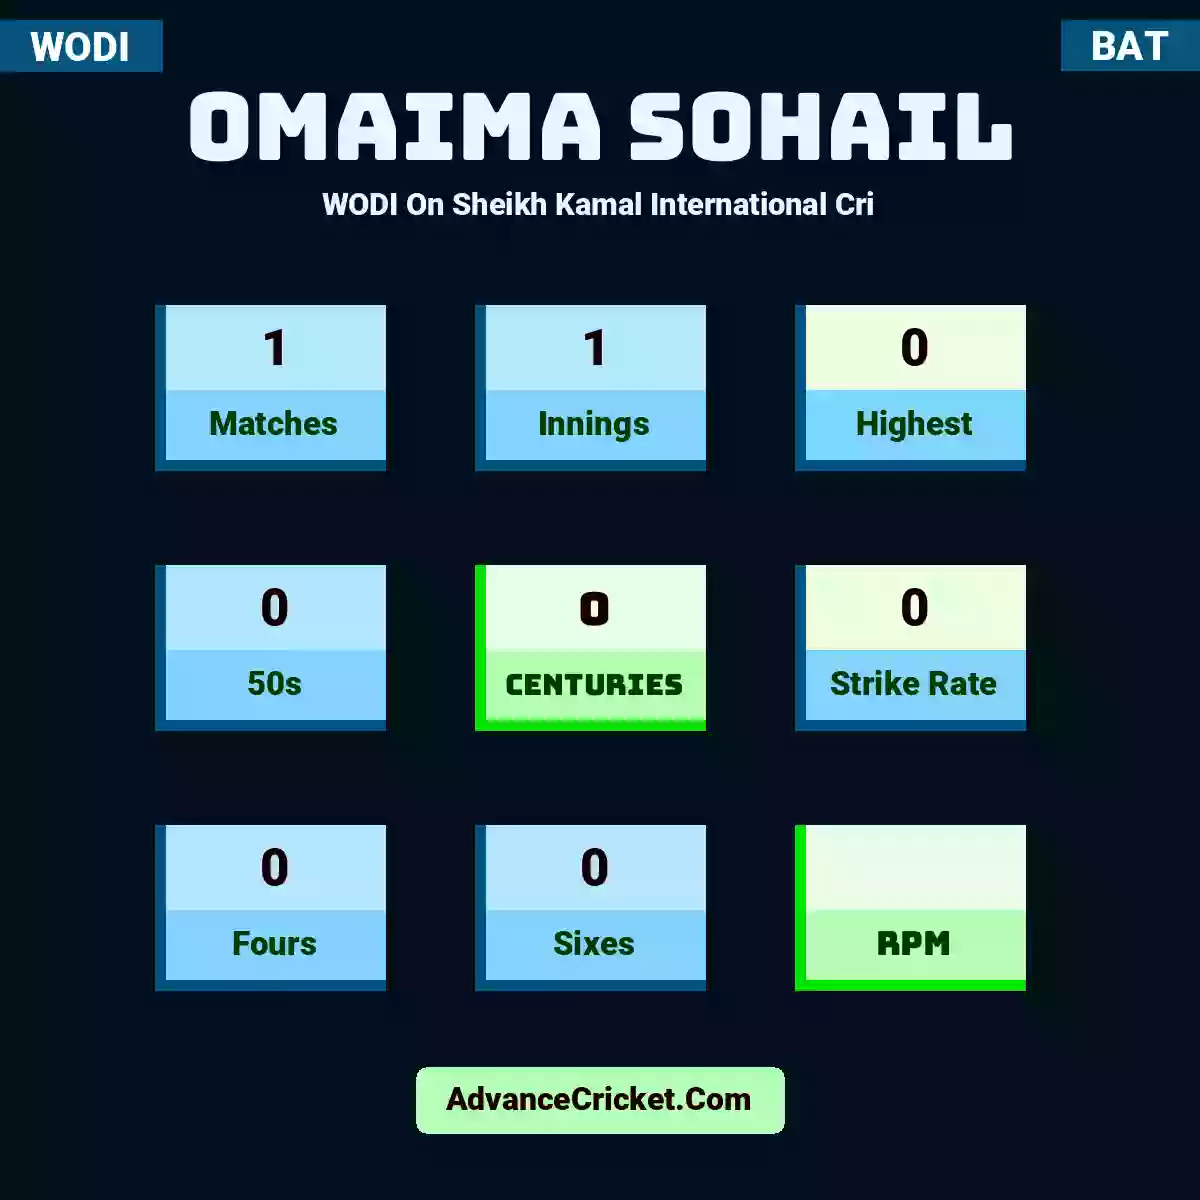 Omaima Sohail WODI  On Sheikh Kamal International Cri, Omaima Sohail played 1 matches, scored 0 runs as highest, 0 half-centuries, and 0 centuries, with a strike rate of 0. O.Sohail hit 0 fours and 0 sixes.